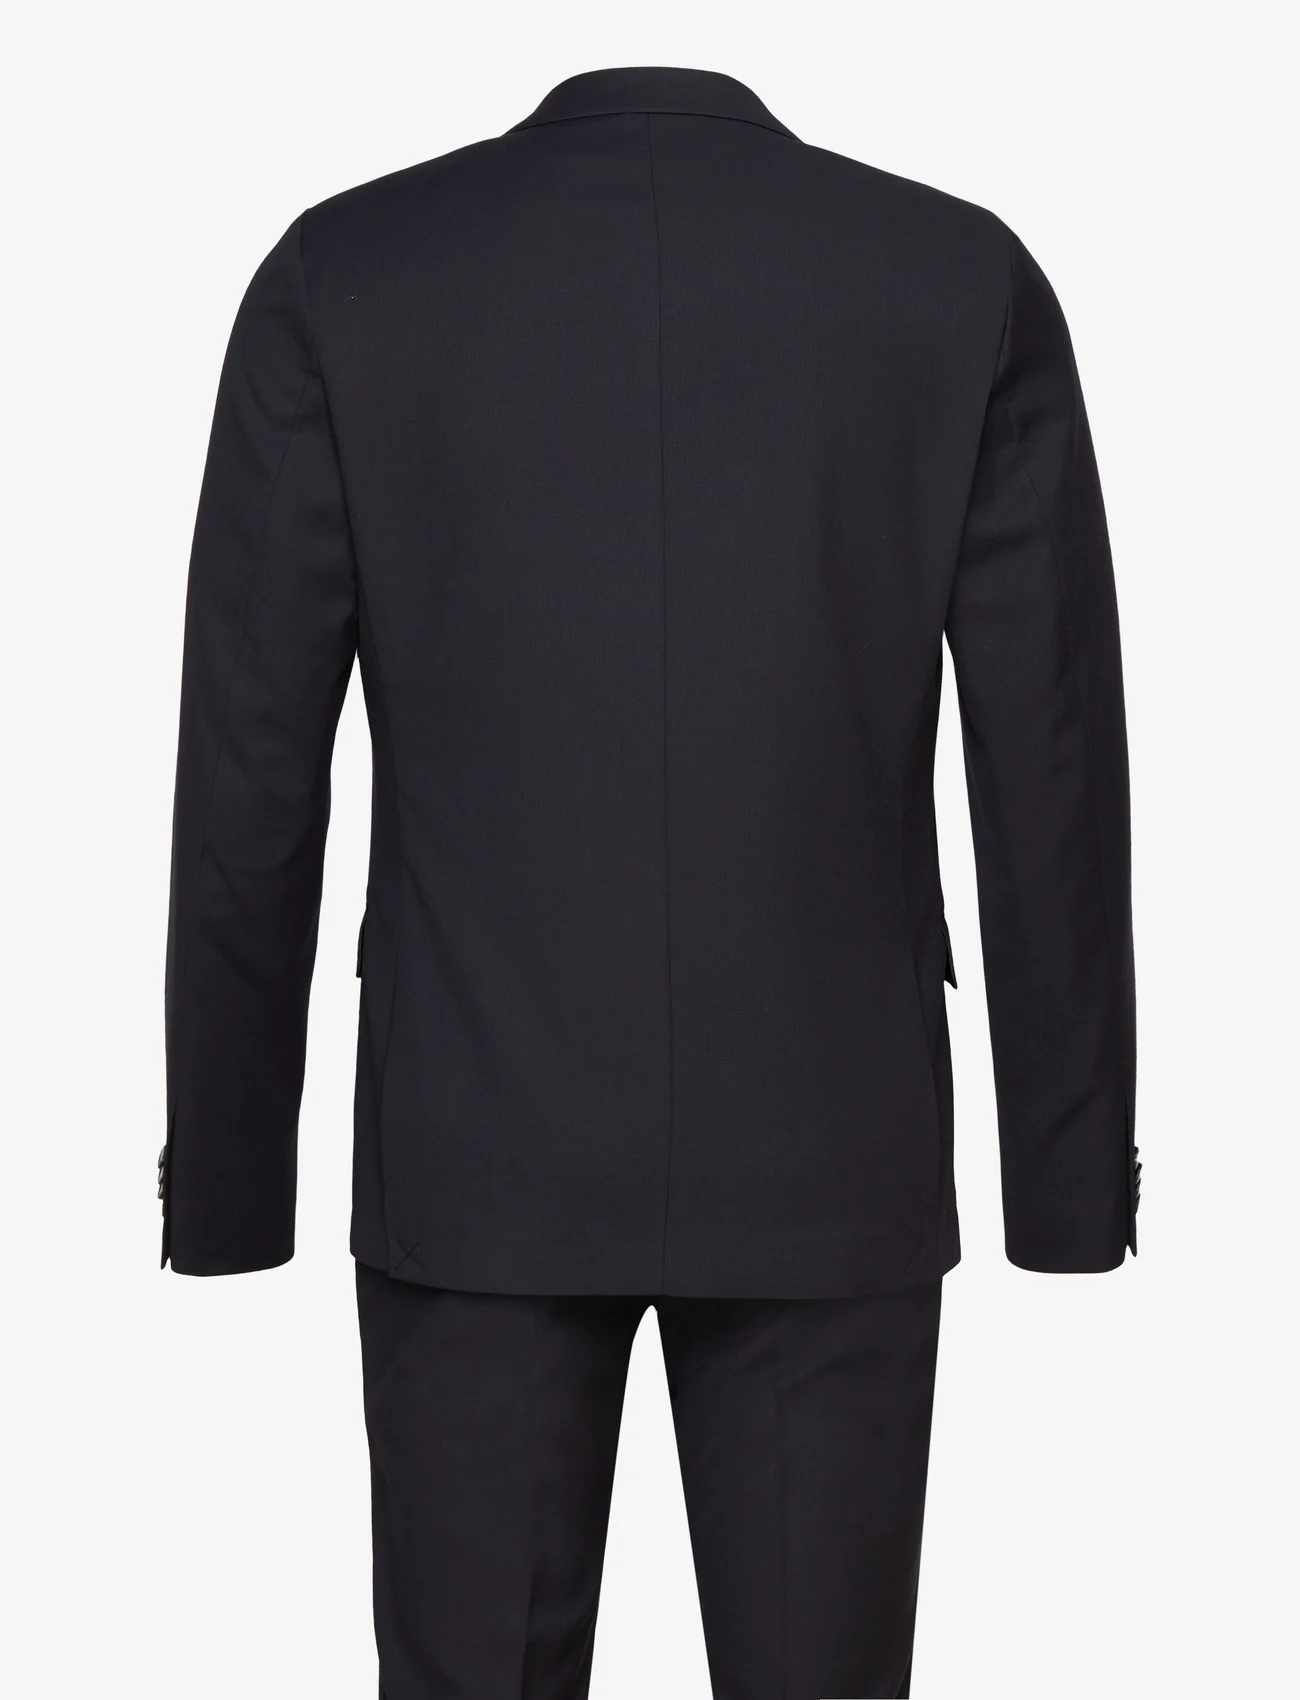 Bruun & Stengade - BS Marin Slim Fit Suit Set - kaksiriviset puvut - black - 1